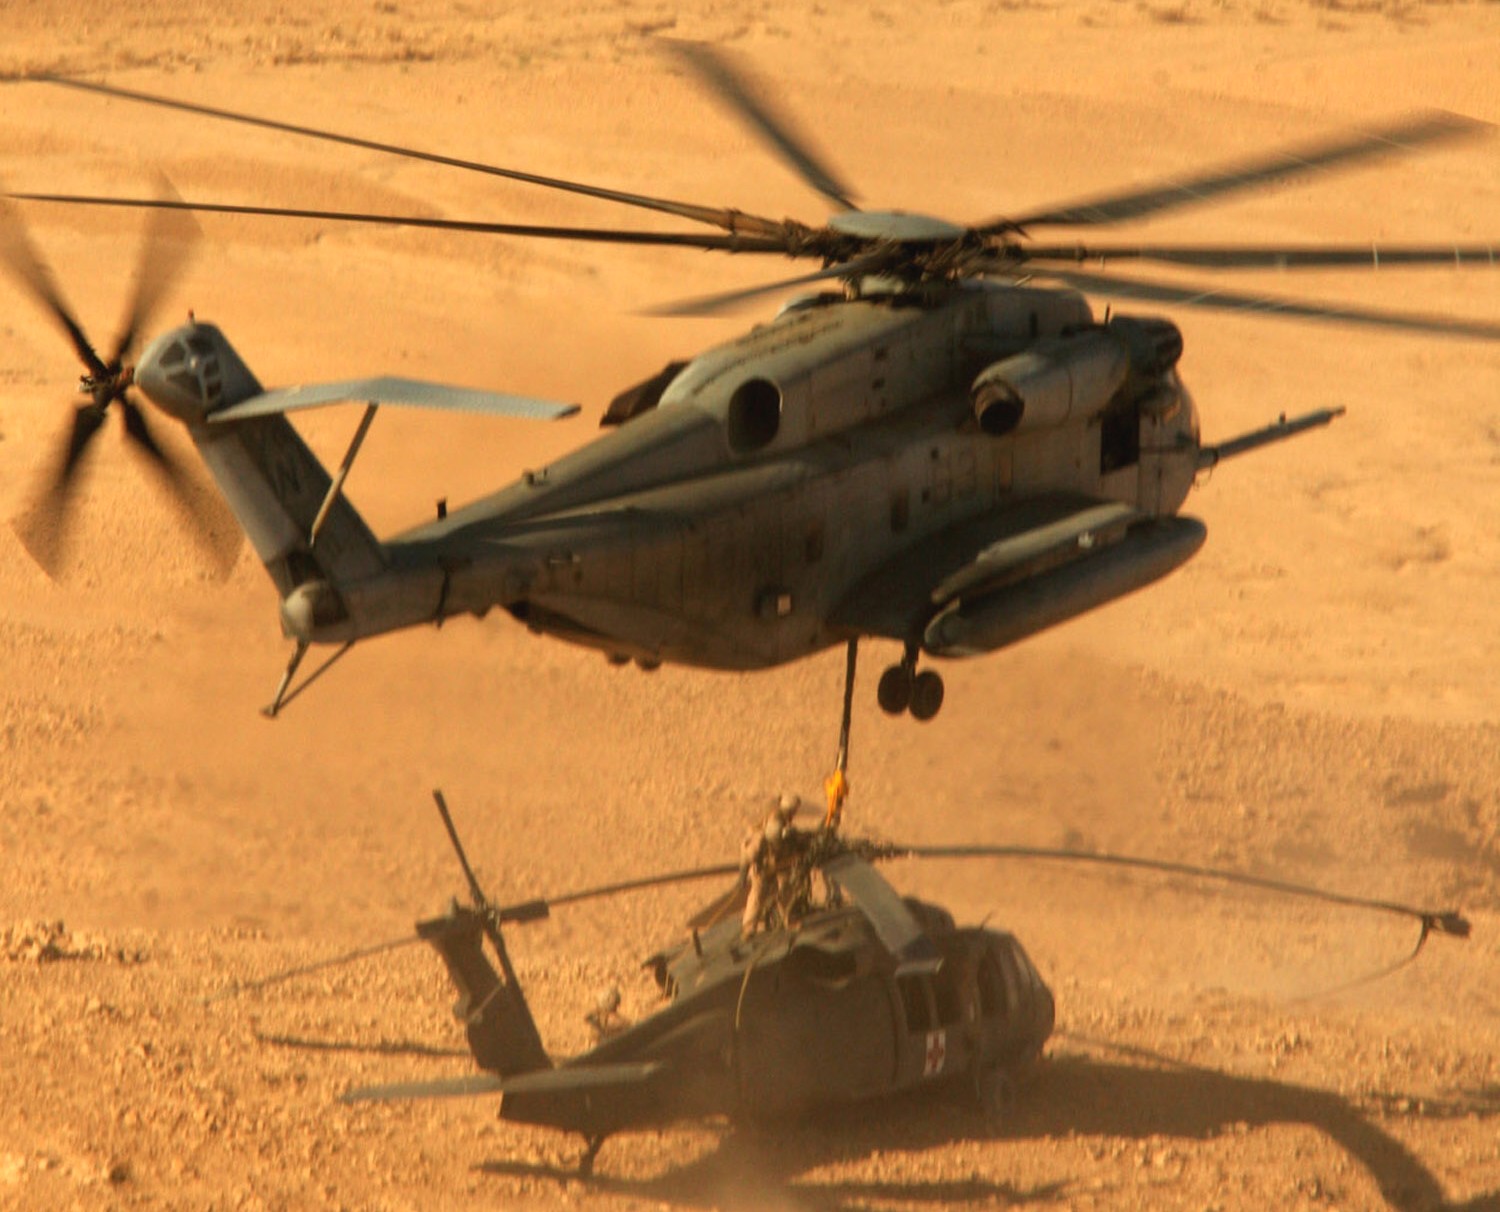 hmh-361 flying tigers marine heavy helicopter squadron usmc sikorsky ch-53e super stallion 73 al anbar iraq